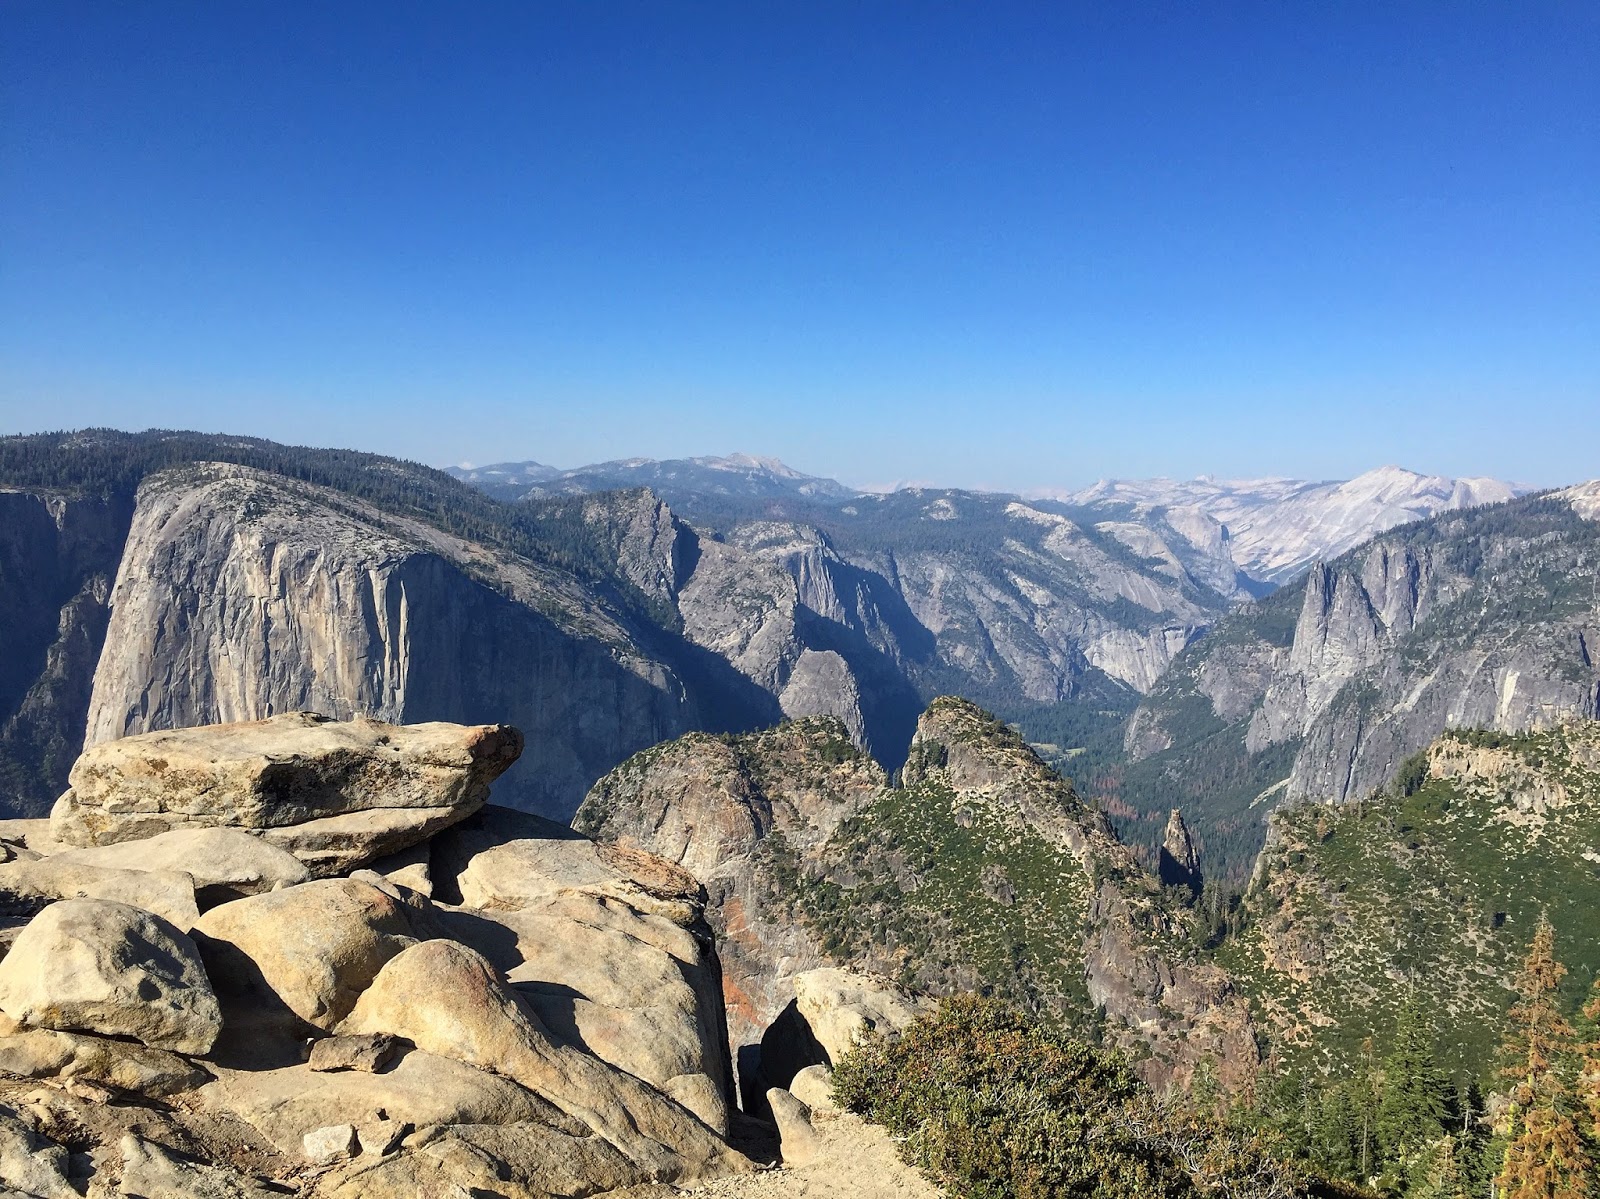 Yosemite hiking guide